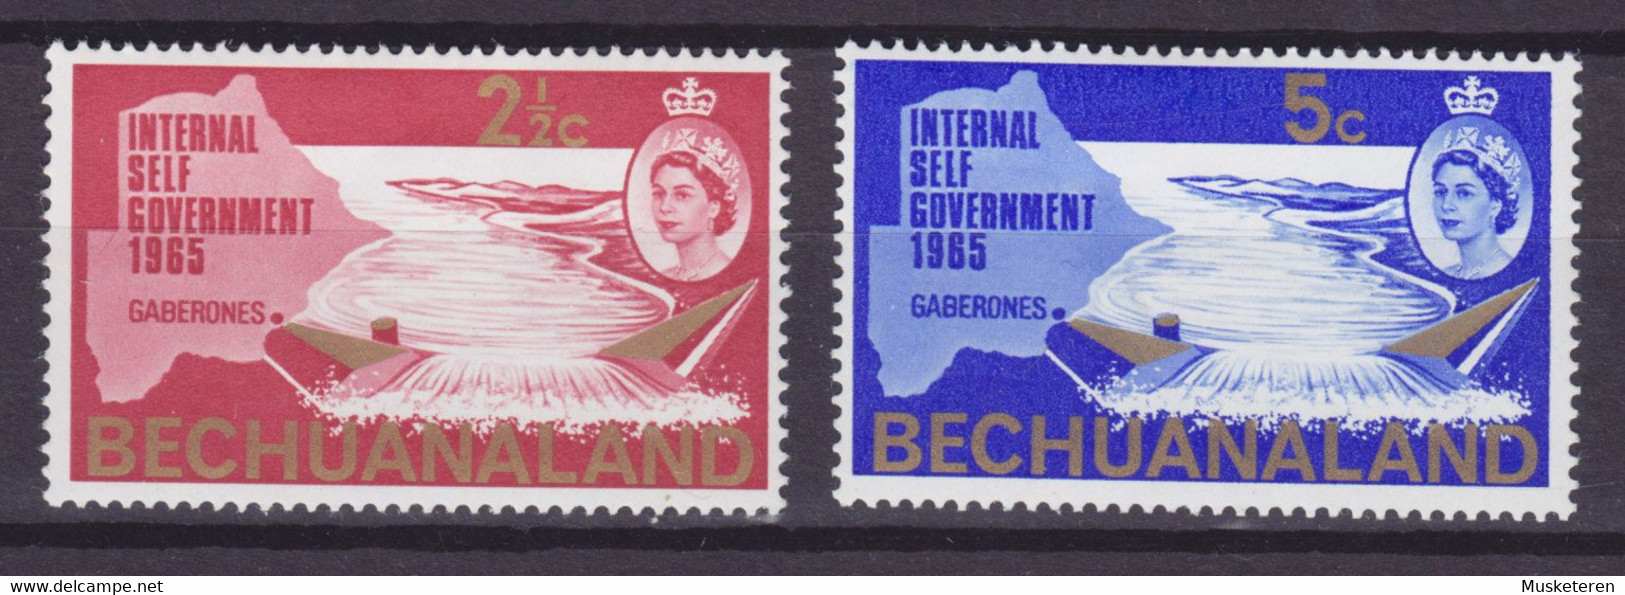 Bechuanaland 1965 Mi. 173-74    2c. & 5c. Self Government Landkarte Notwani River, MH** - 1965-1966 Autonomie Interne